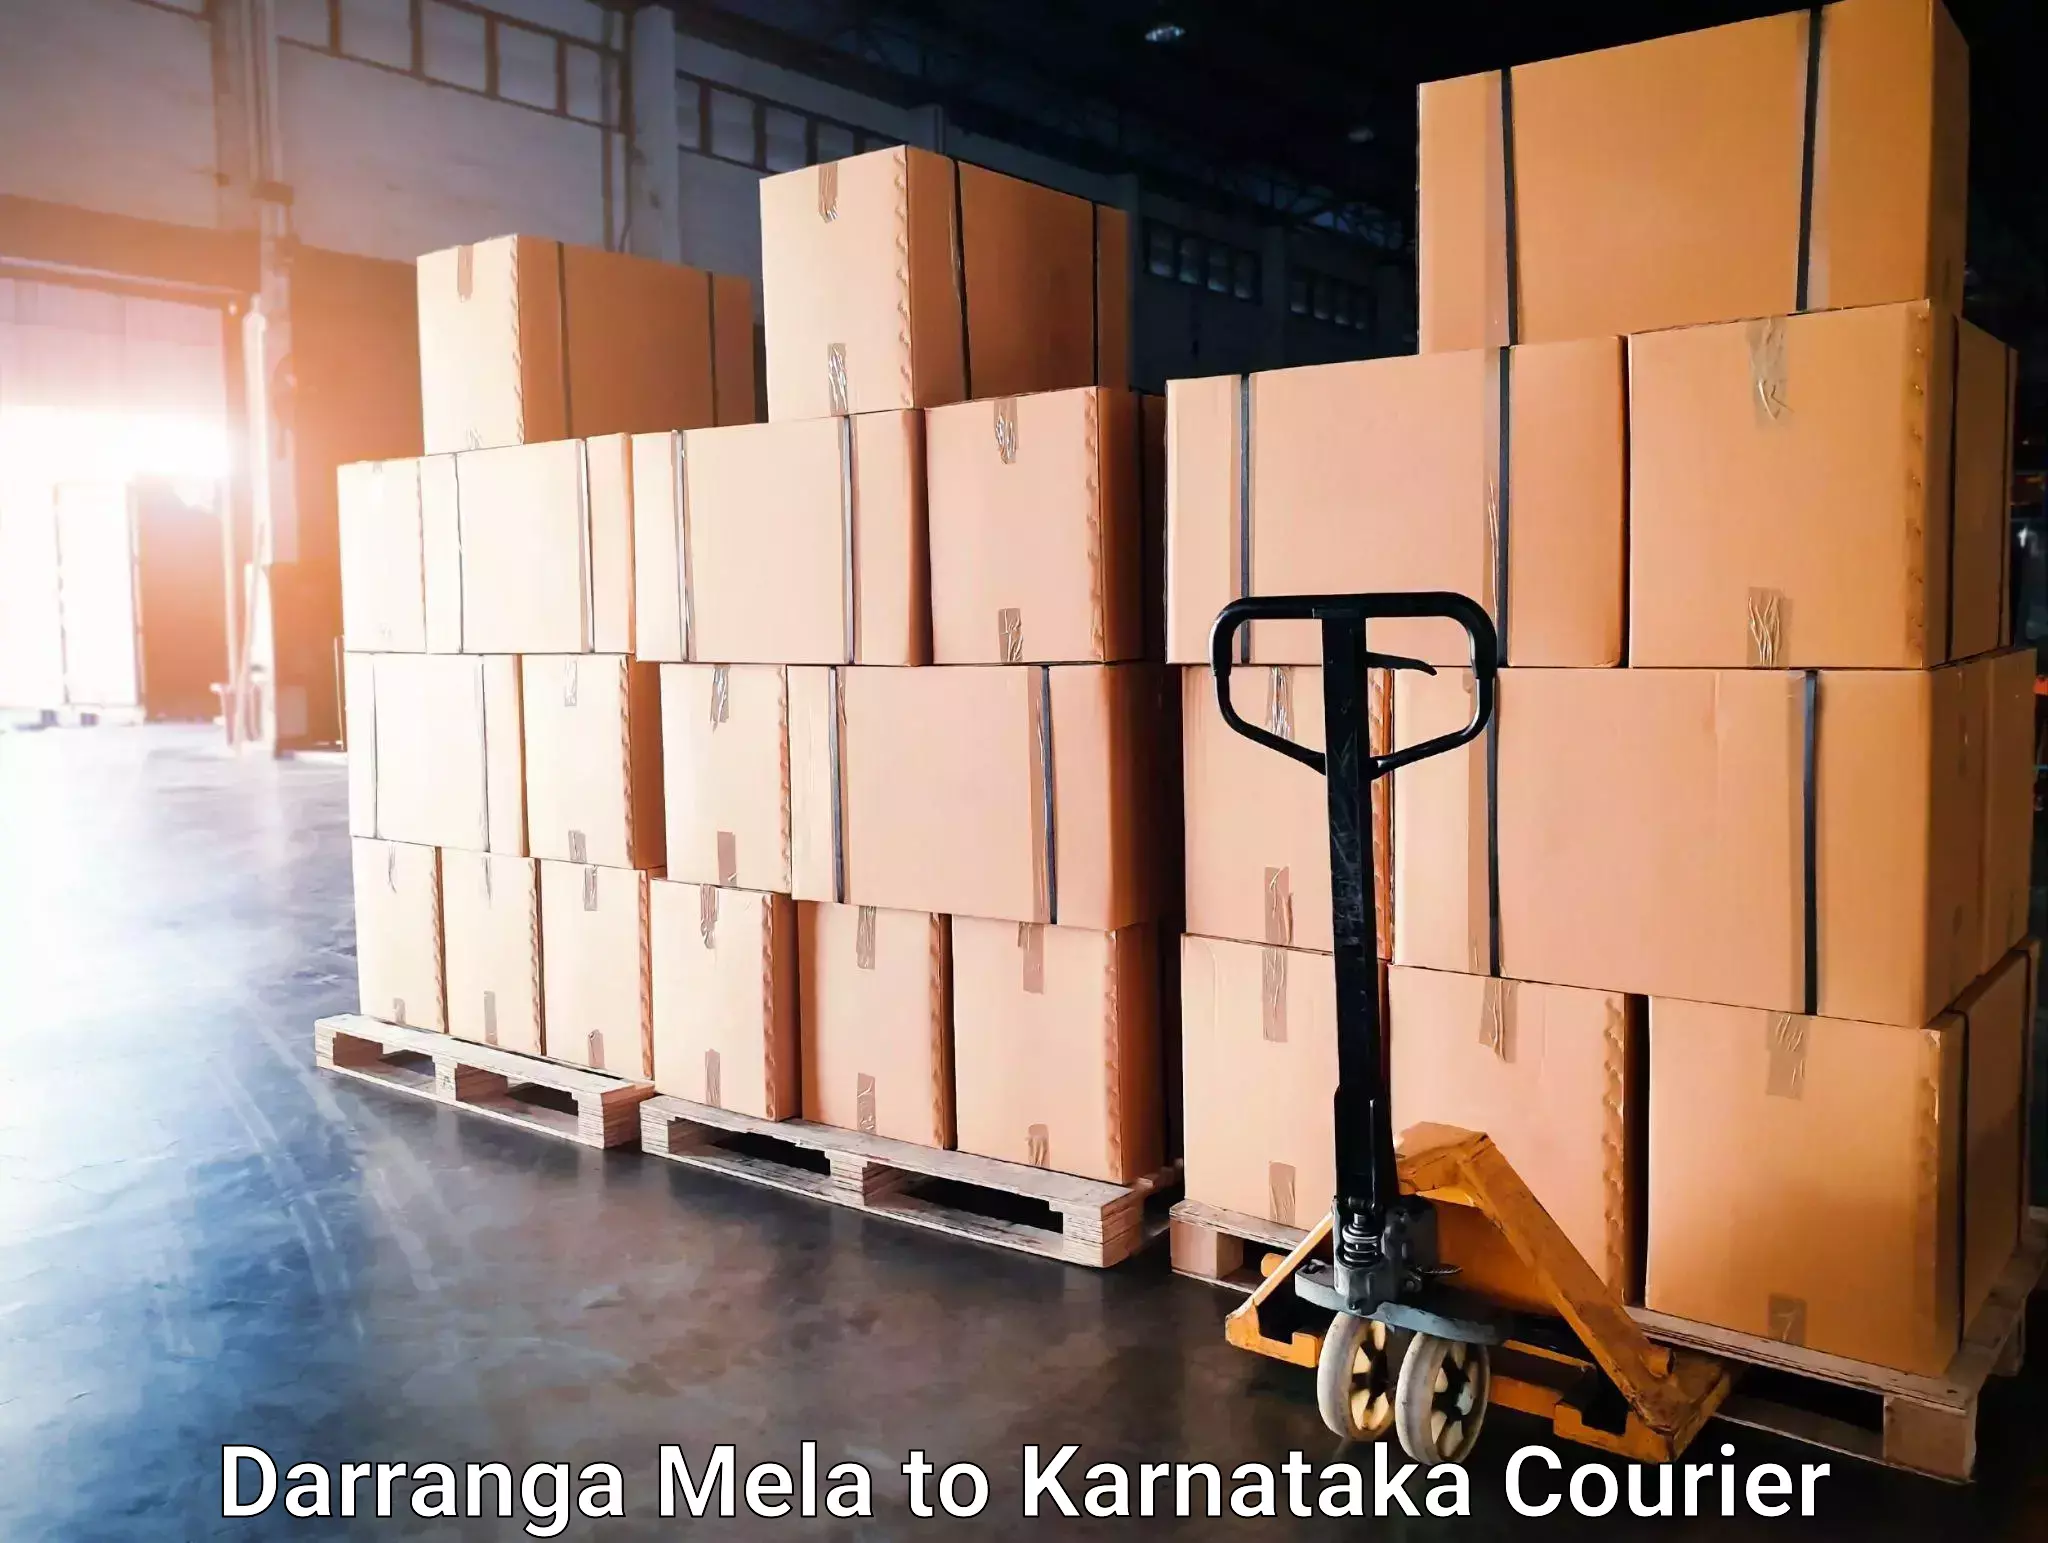 International courier networks Darranga Mela to Maramanahalli